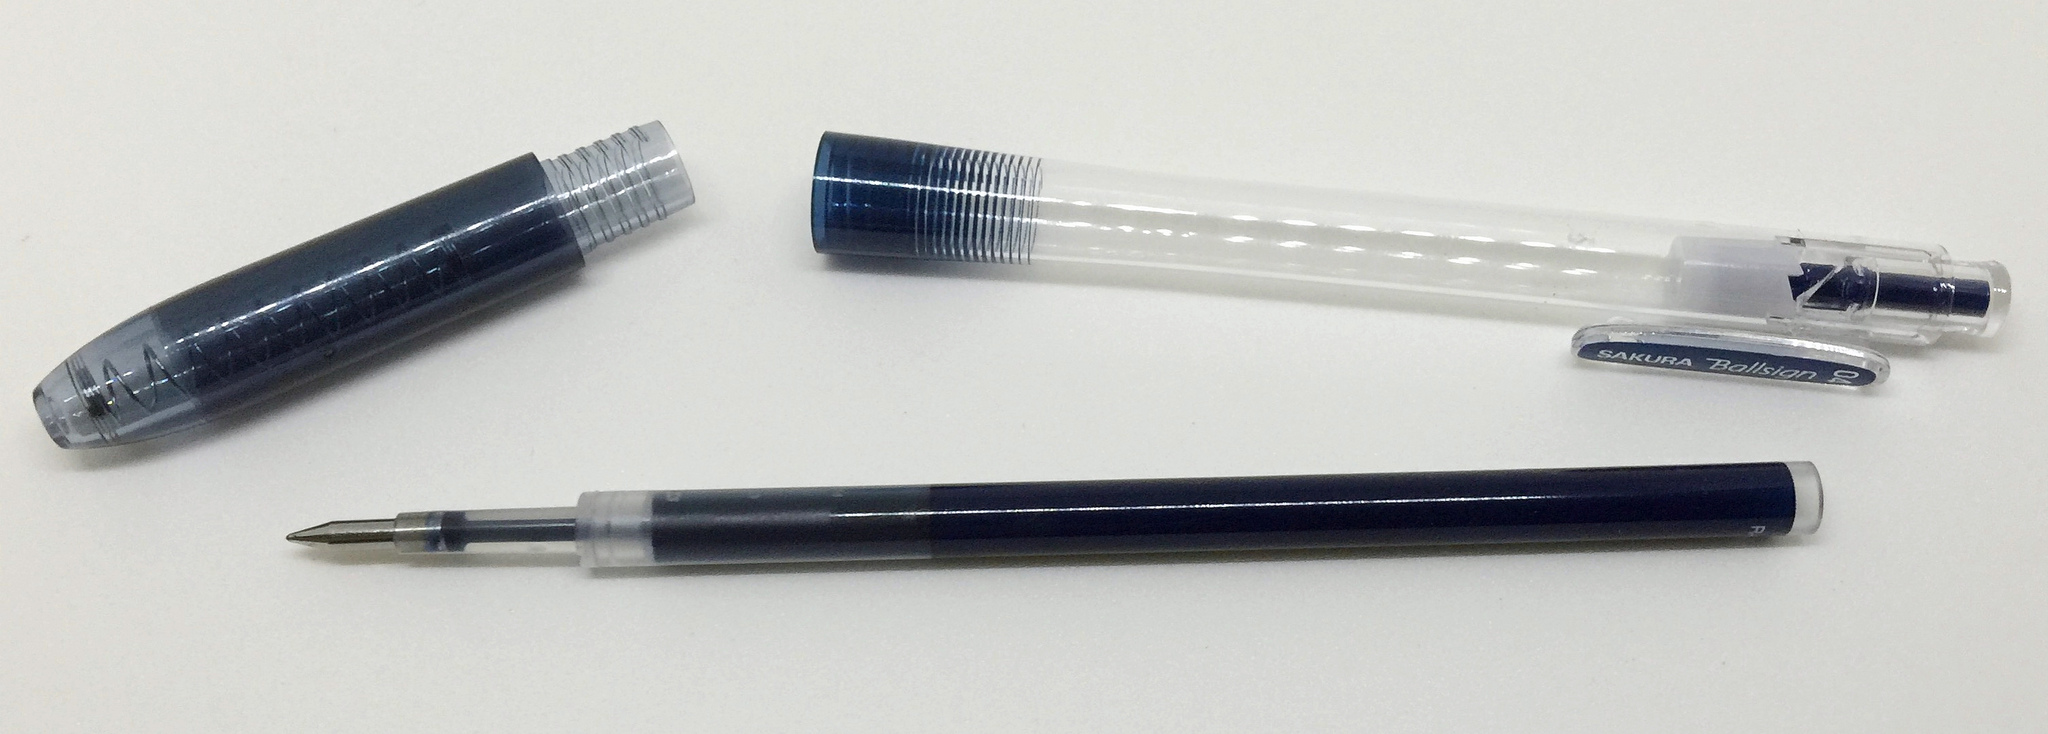 Sakura Ballsign Knock Gel Ink Pen Review — The Pen Addict